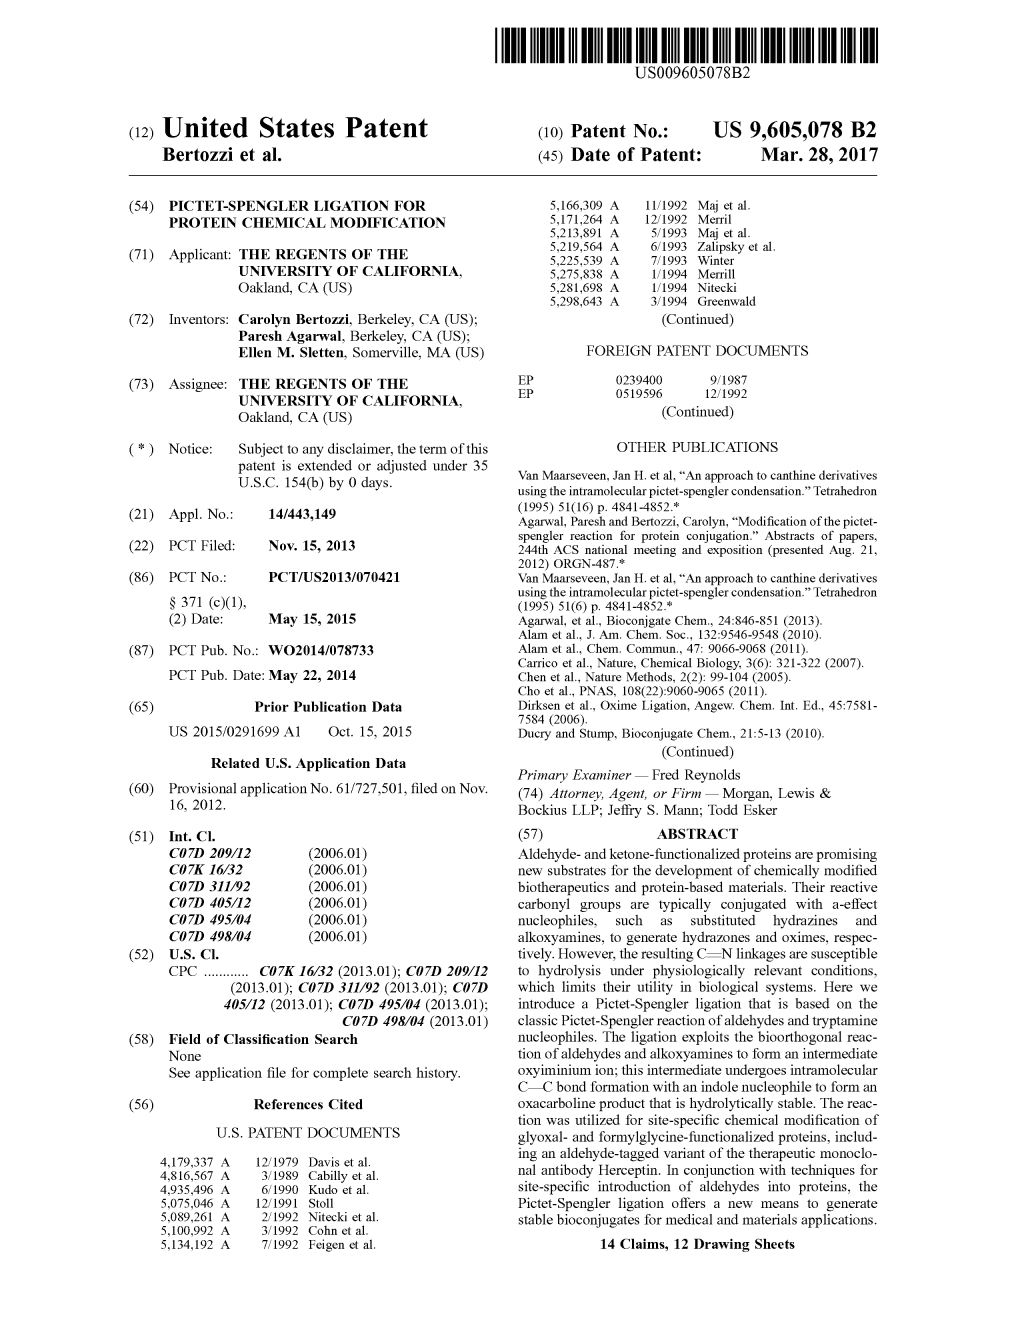 (12) United States Patent (10) Patent No.: US 9,605,078 B2 Bertozzi Et Al